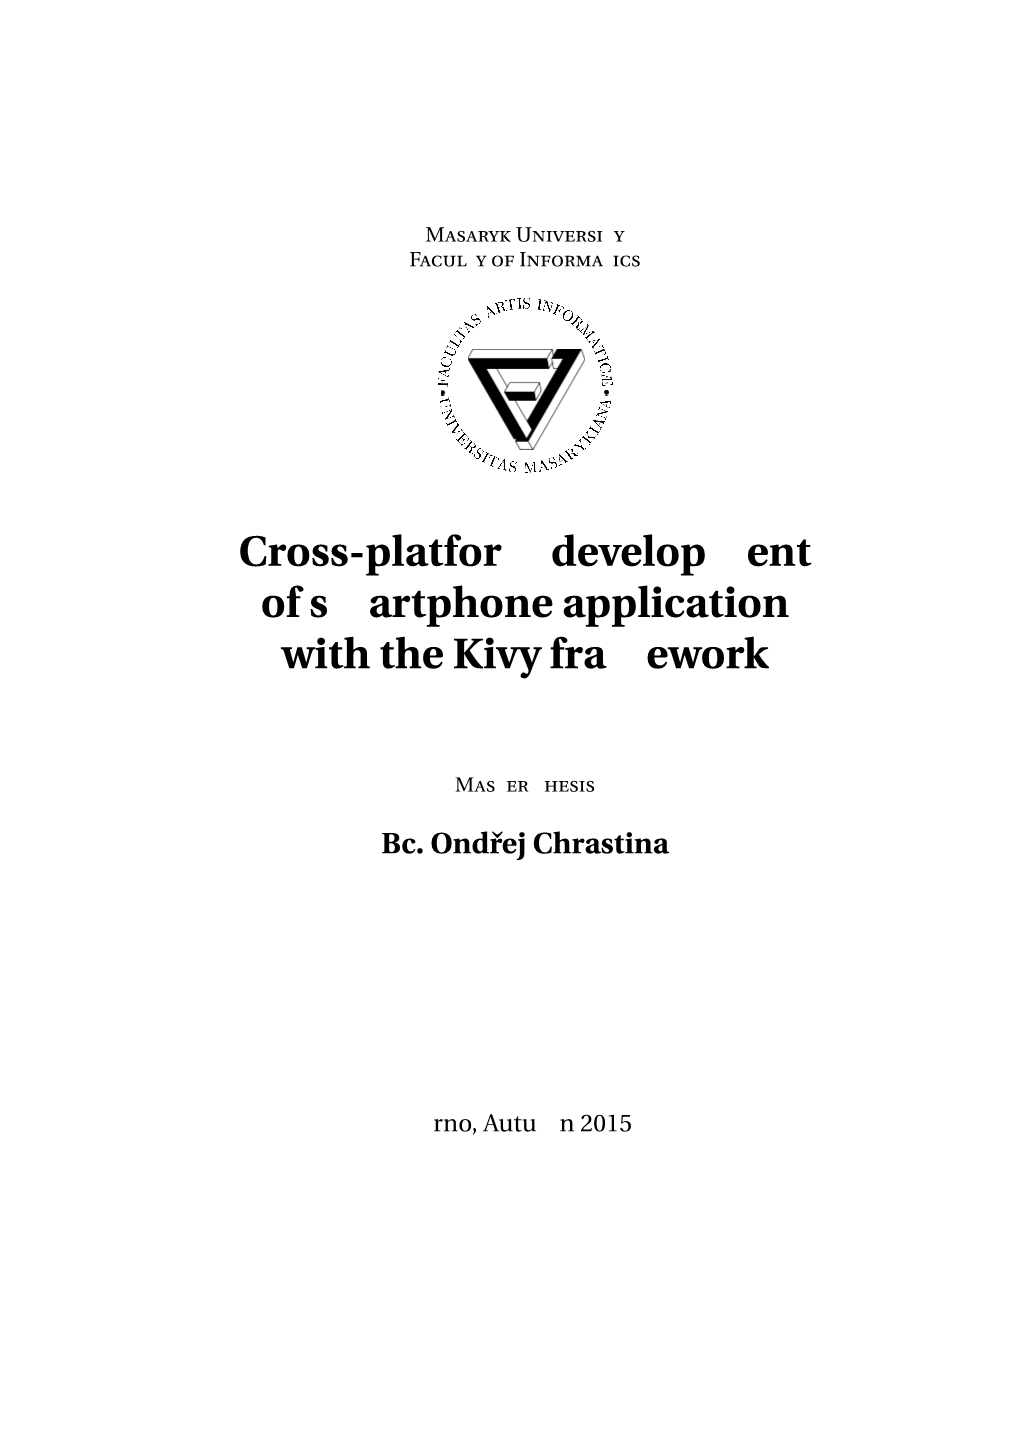 Cross-Platform Development of Smartphone Application with the Kivy Framework